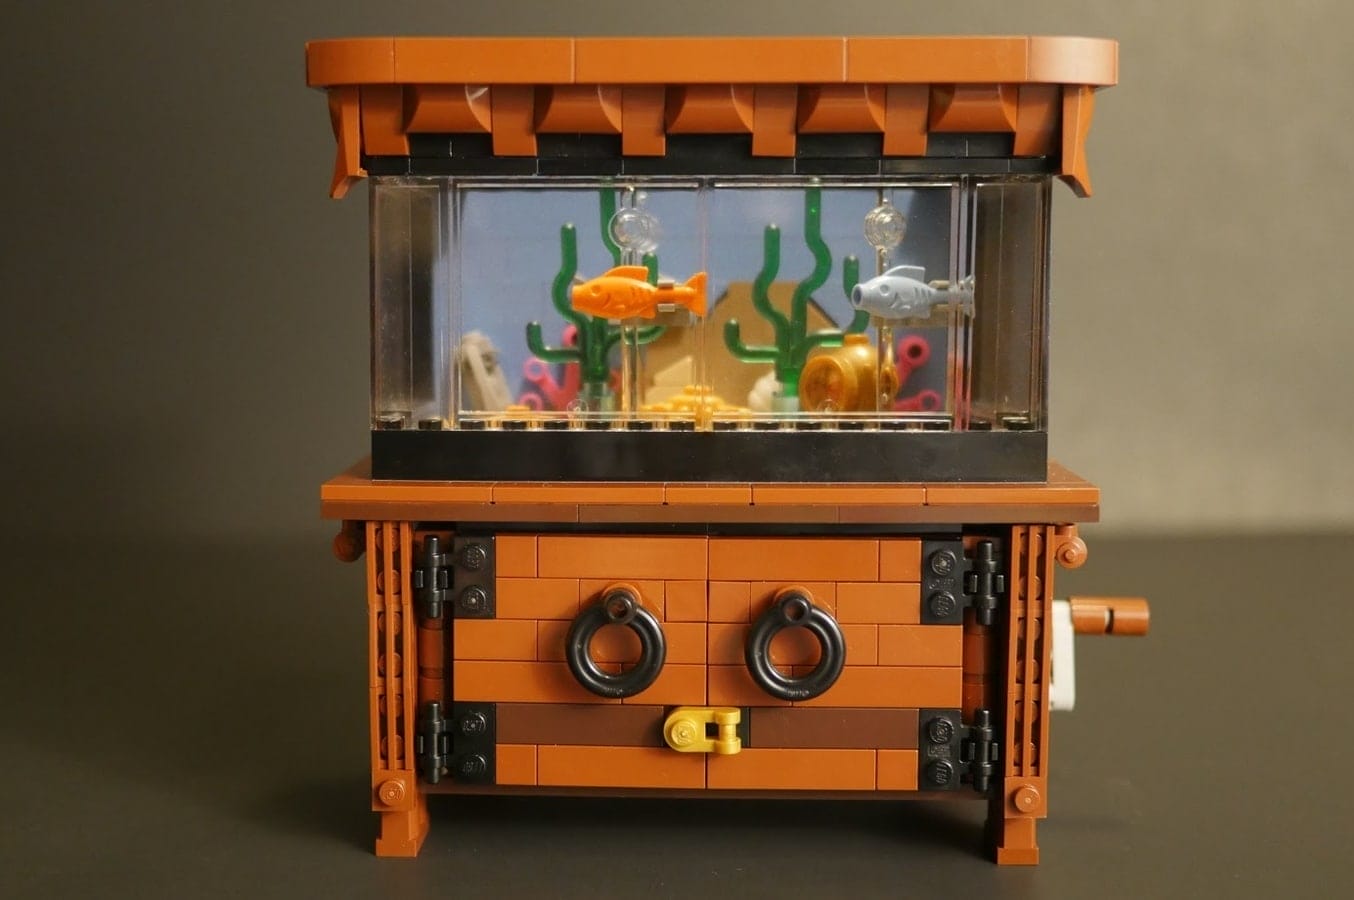 Das LEGO Aquarium hat was zu bieten. (Foto: LEGO Ideas)